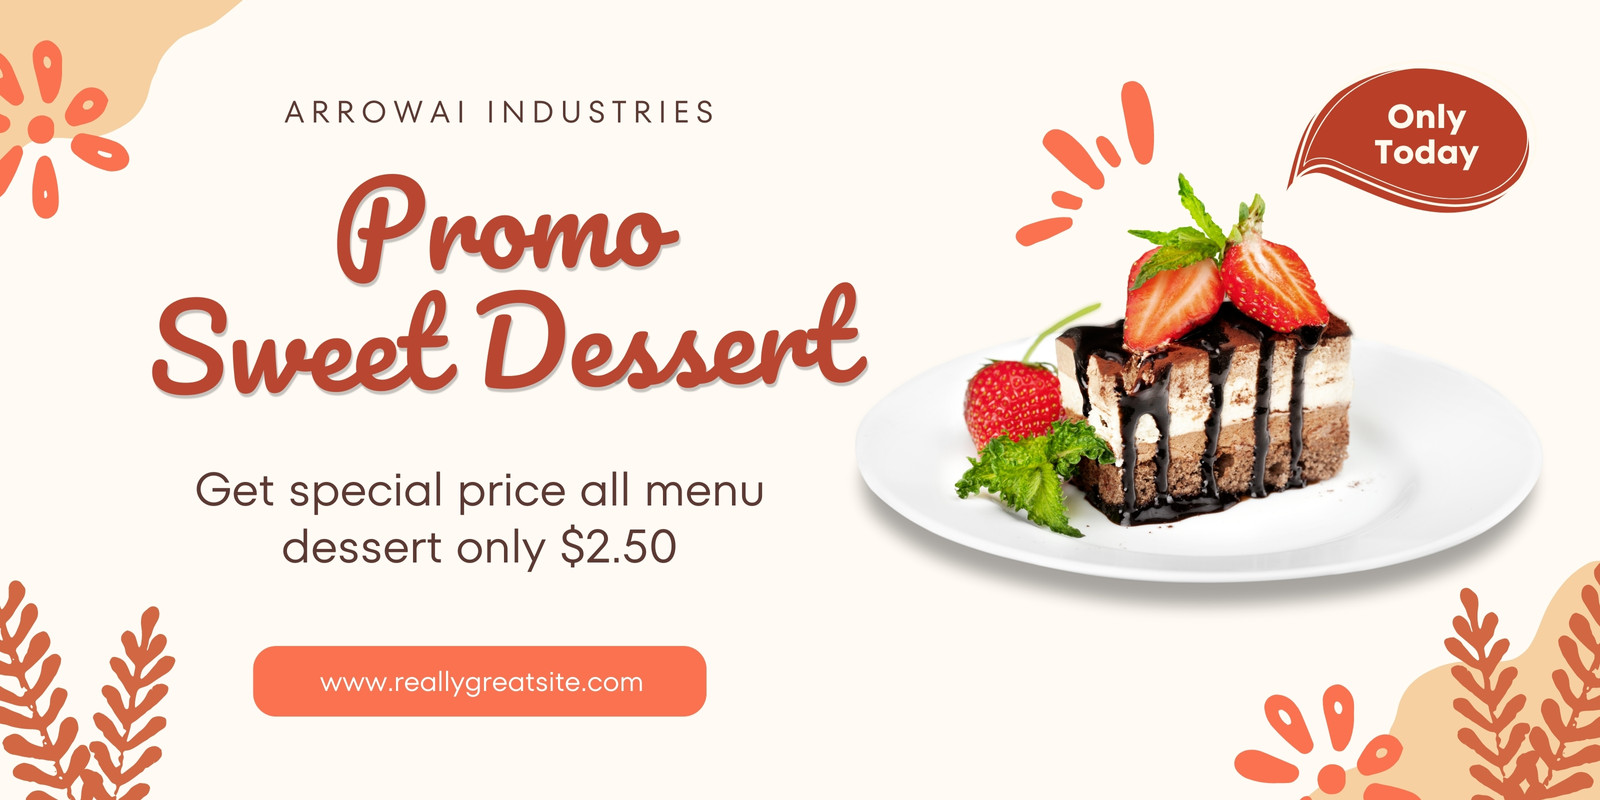 Fruitcake dessert poster template image_picture free download  401170446_lovepik.com